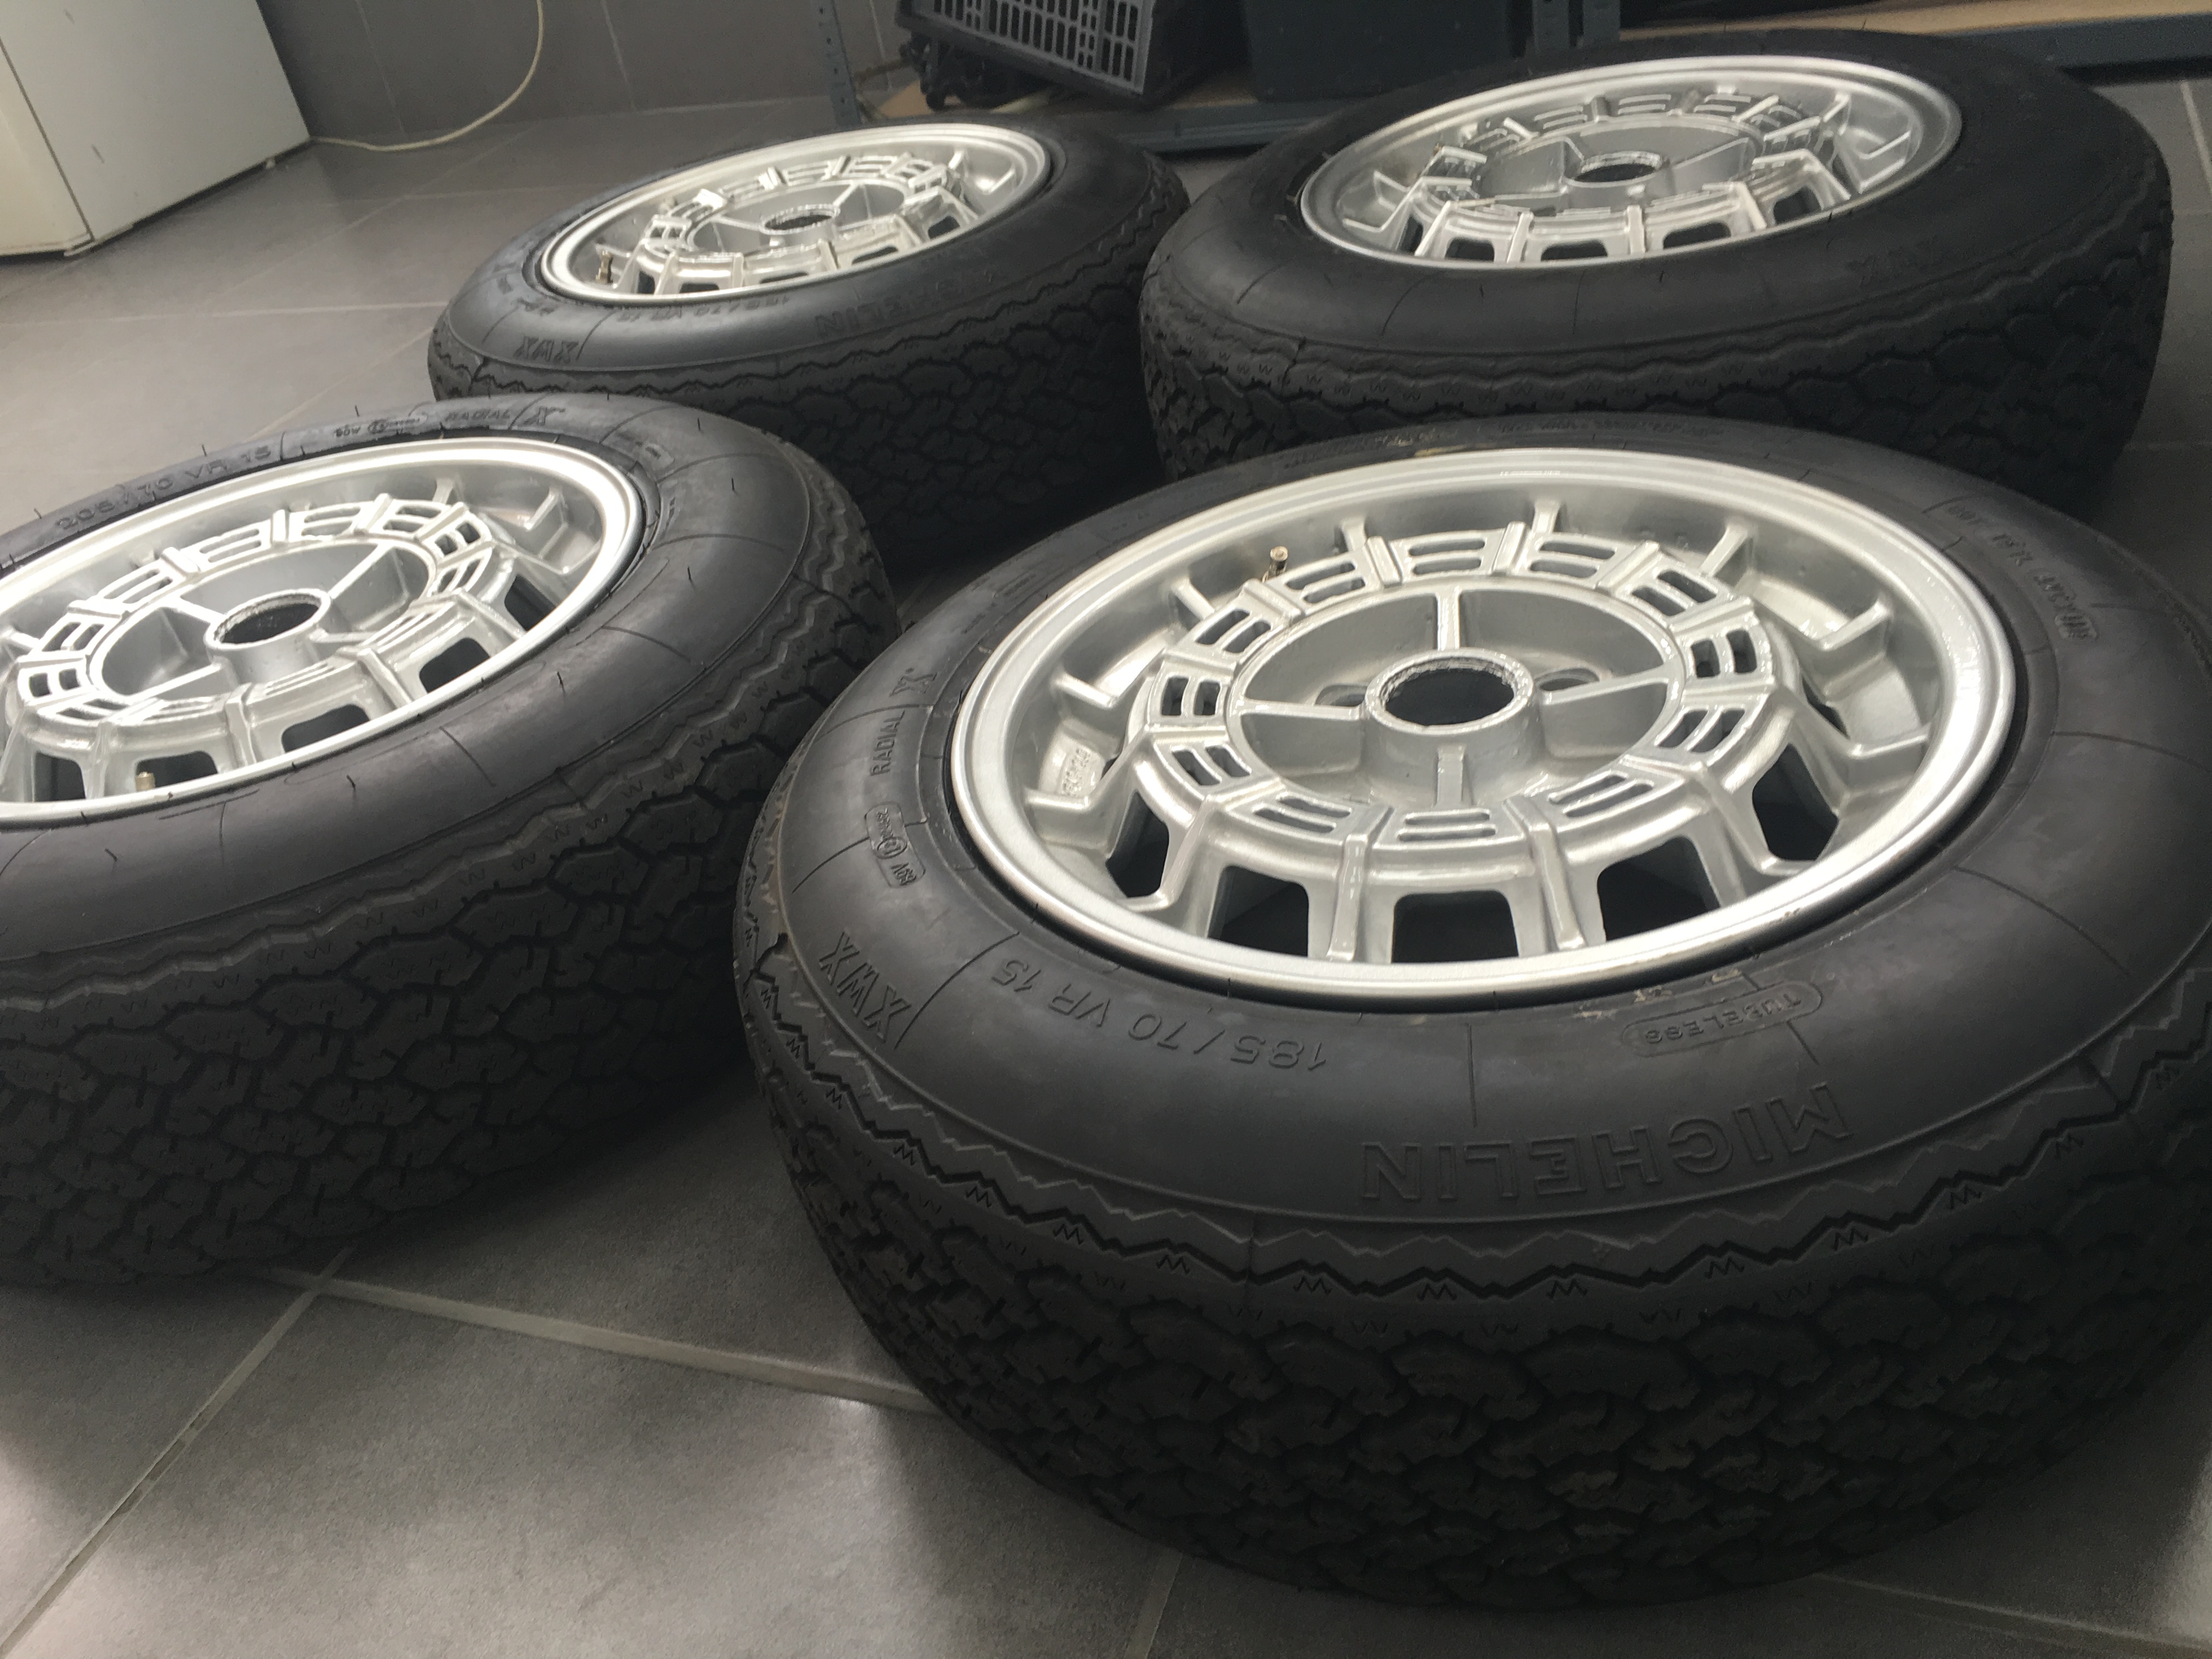 Maserati Merak Wheels and Tyres